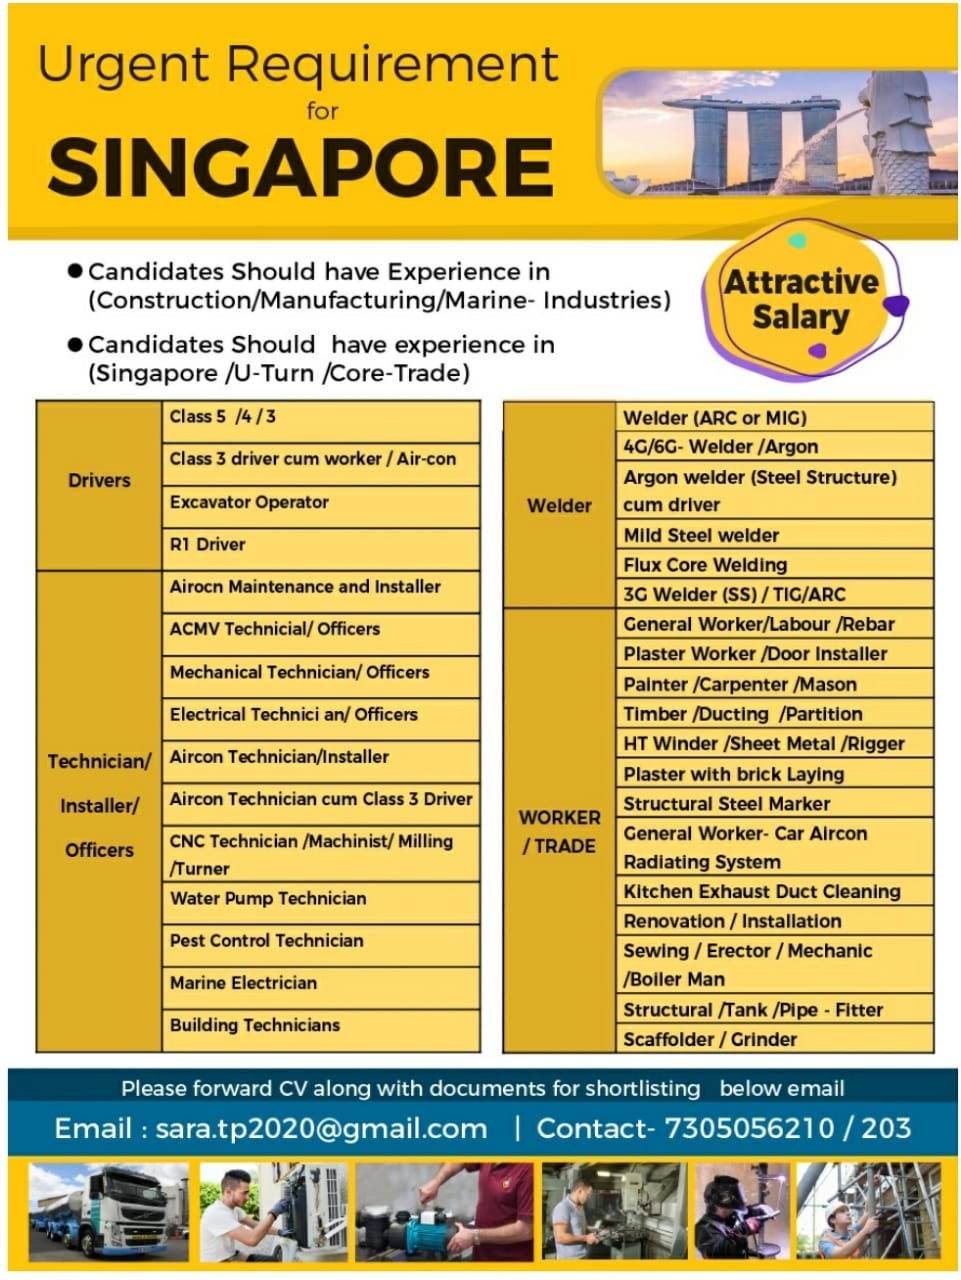 URGENT REQUIREMENT FOR SINGAPORE